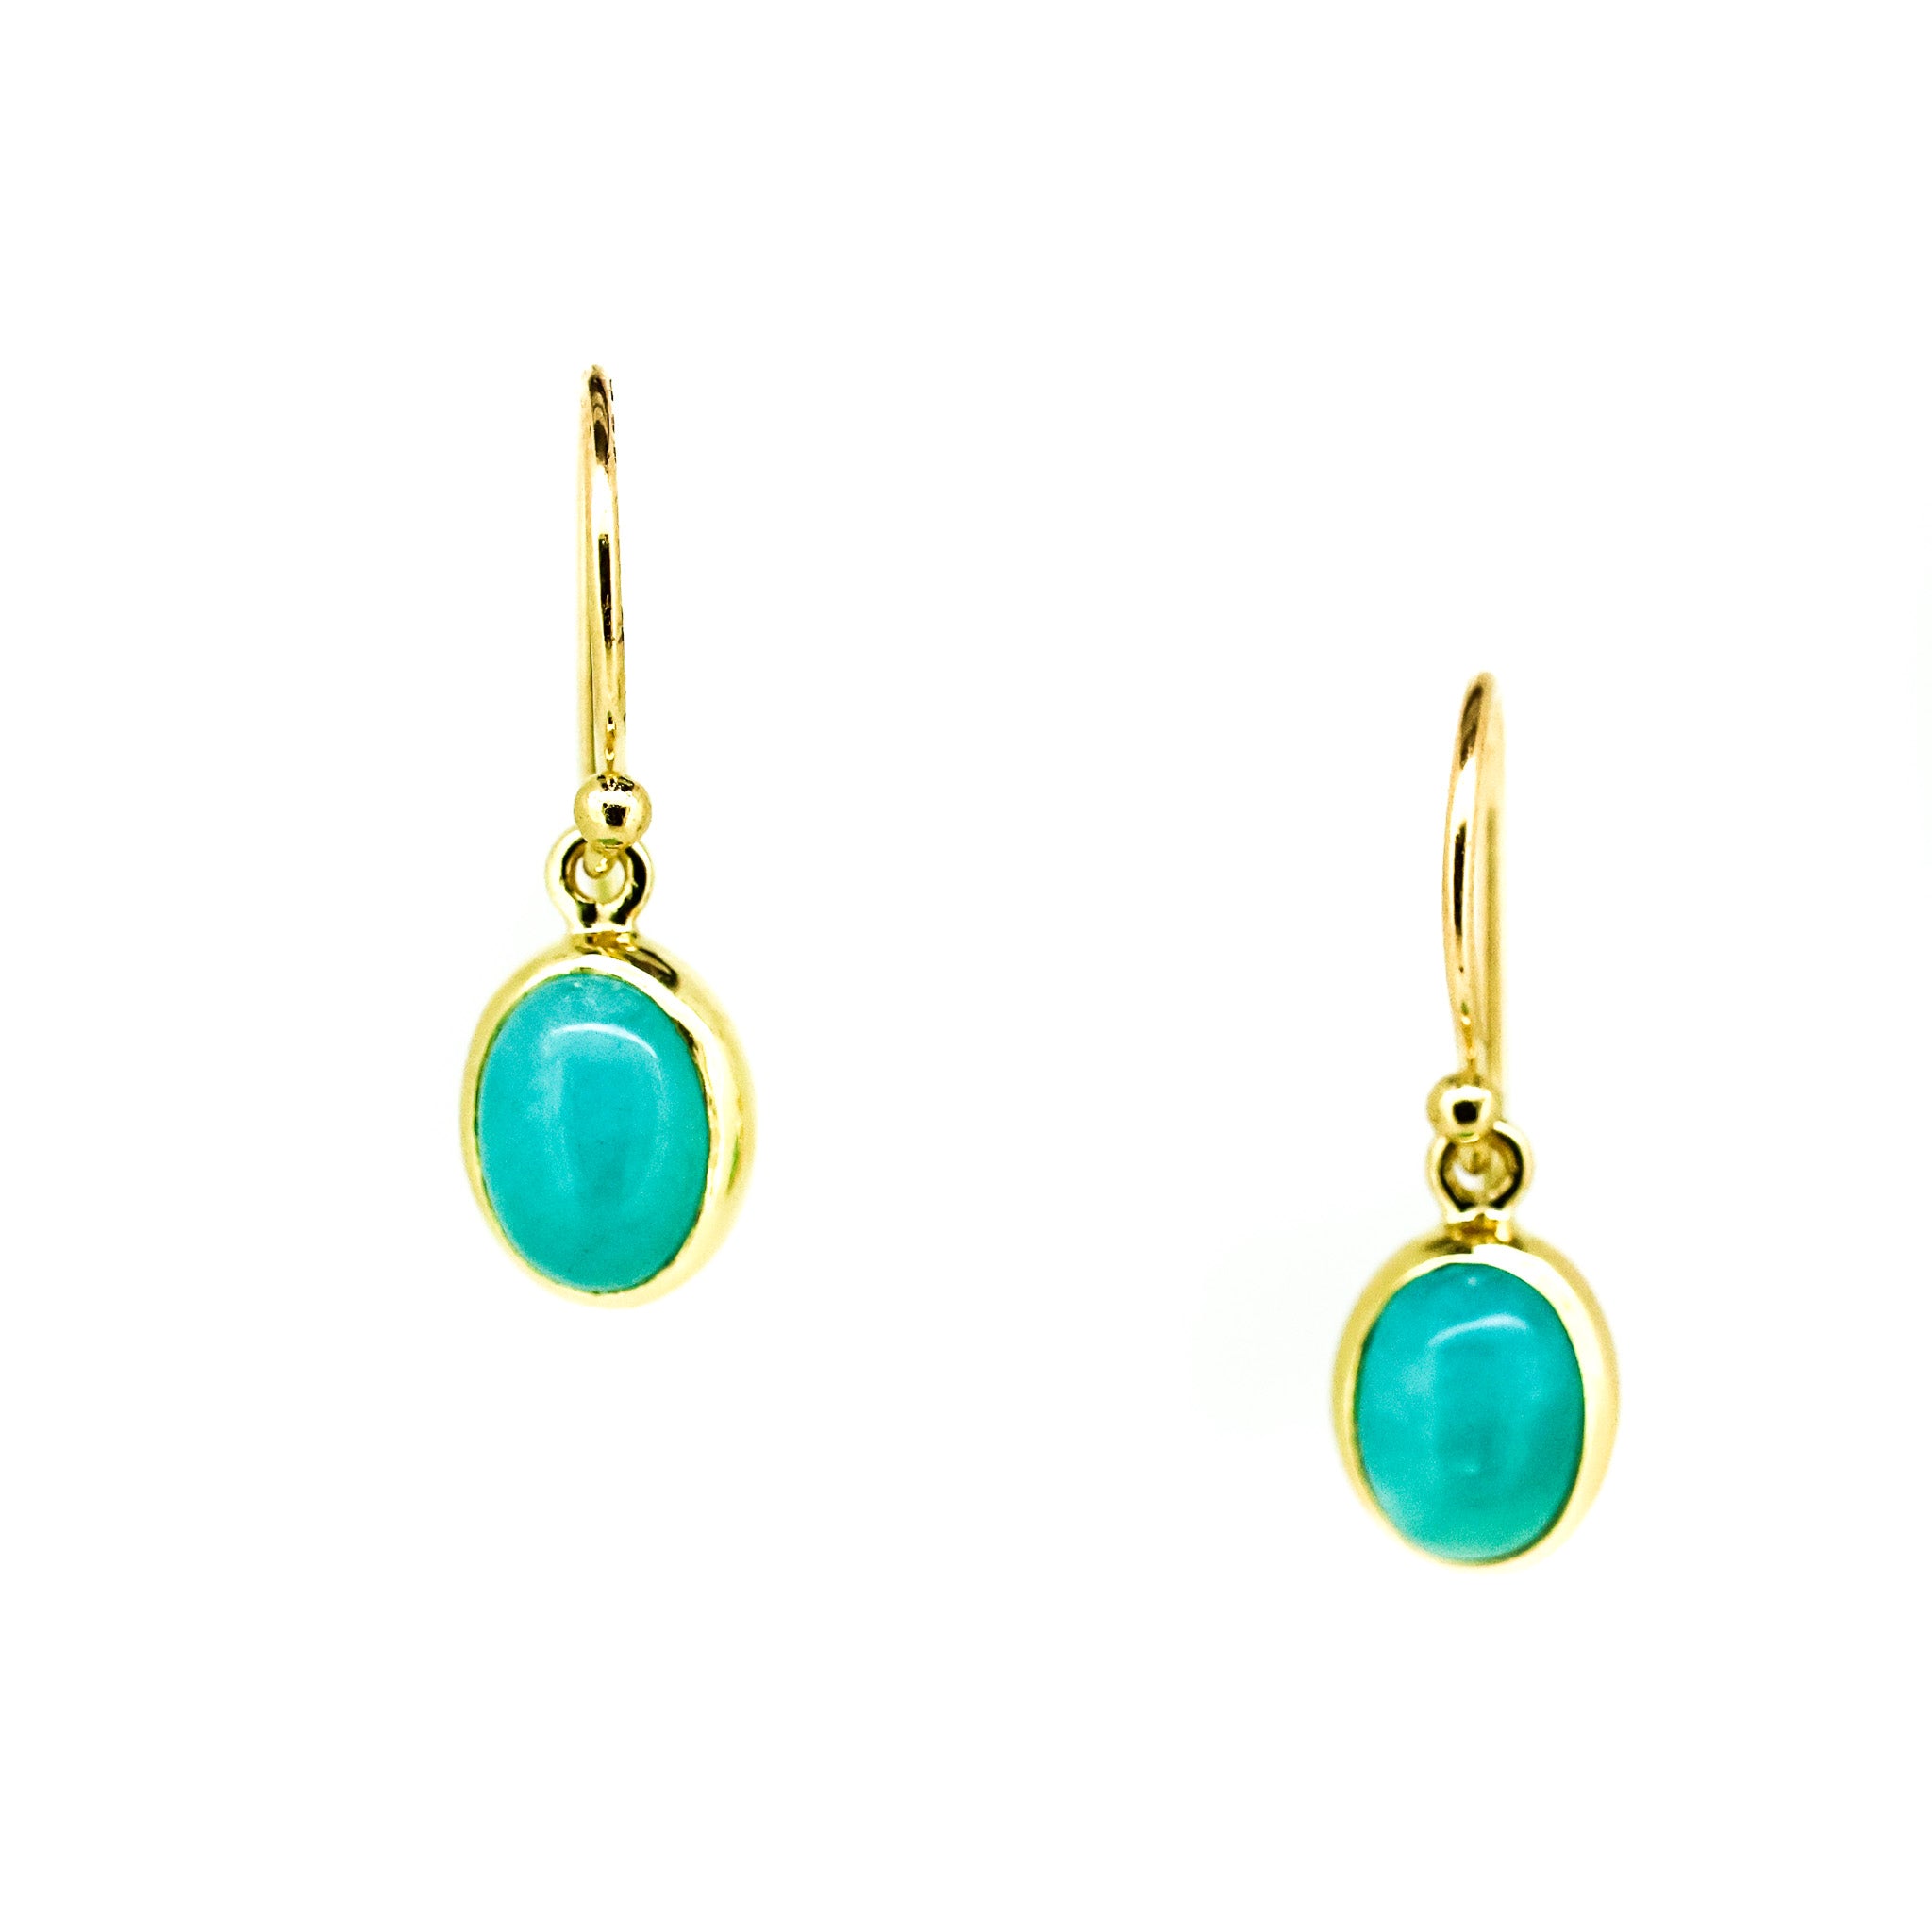 Oval amazonite hook earrings set in gold vermeil